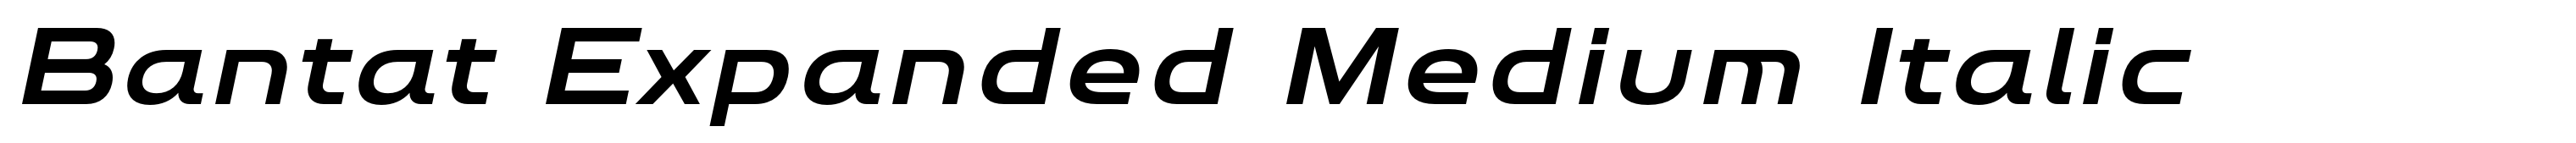 Bantat Expanded Medium Italic